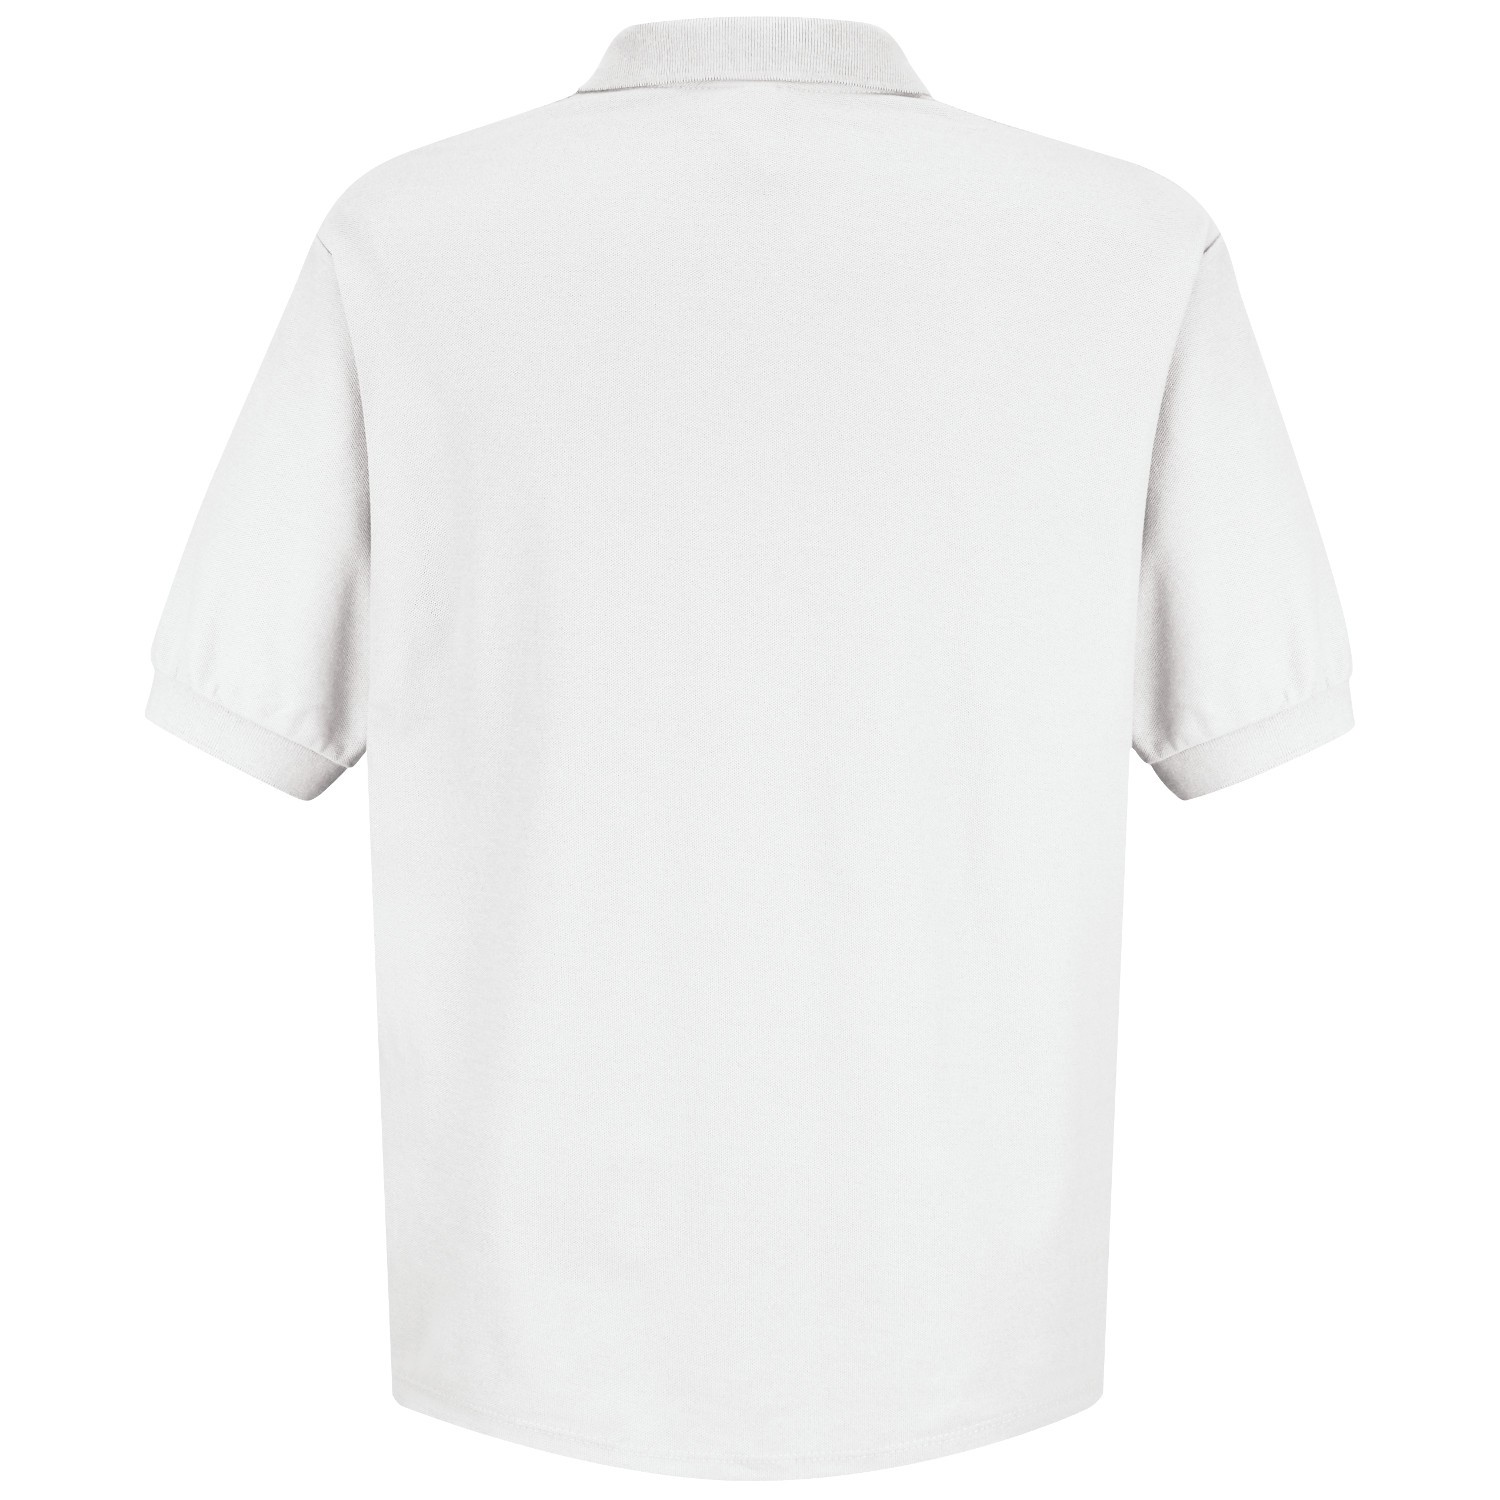 Red Kap SK72 Cotton/Polyester Blend Pique Knit Shirt - Pocketless ...